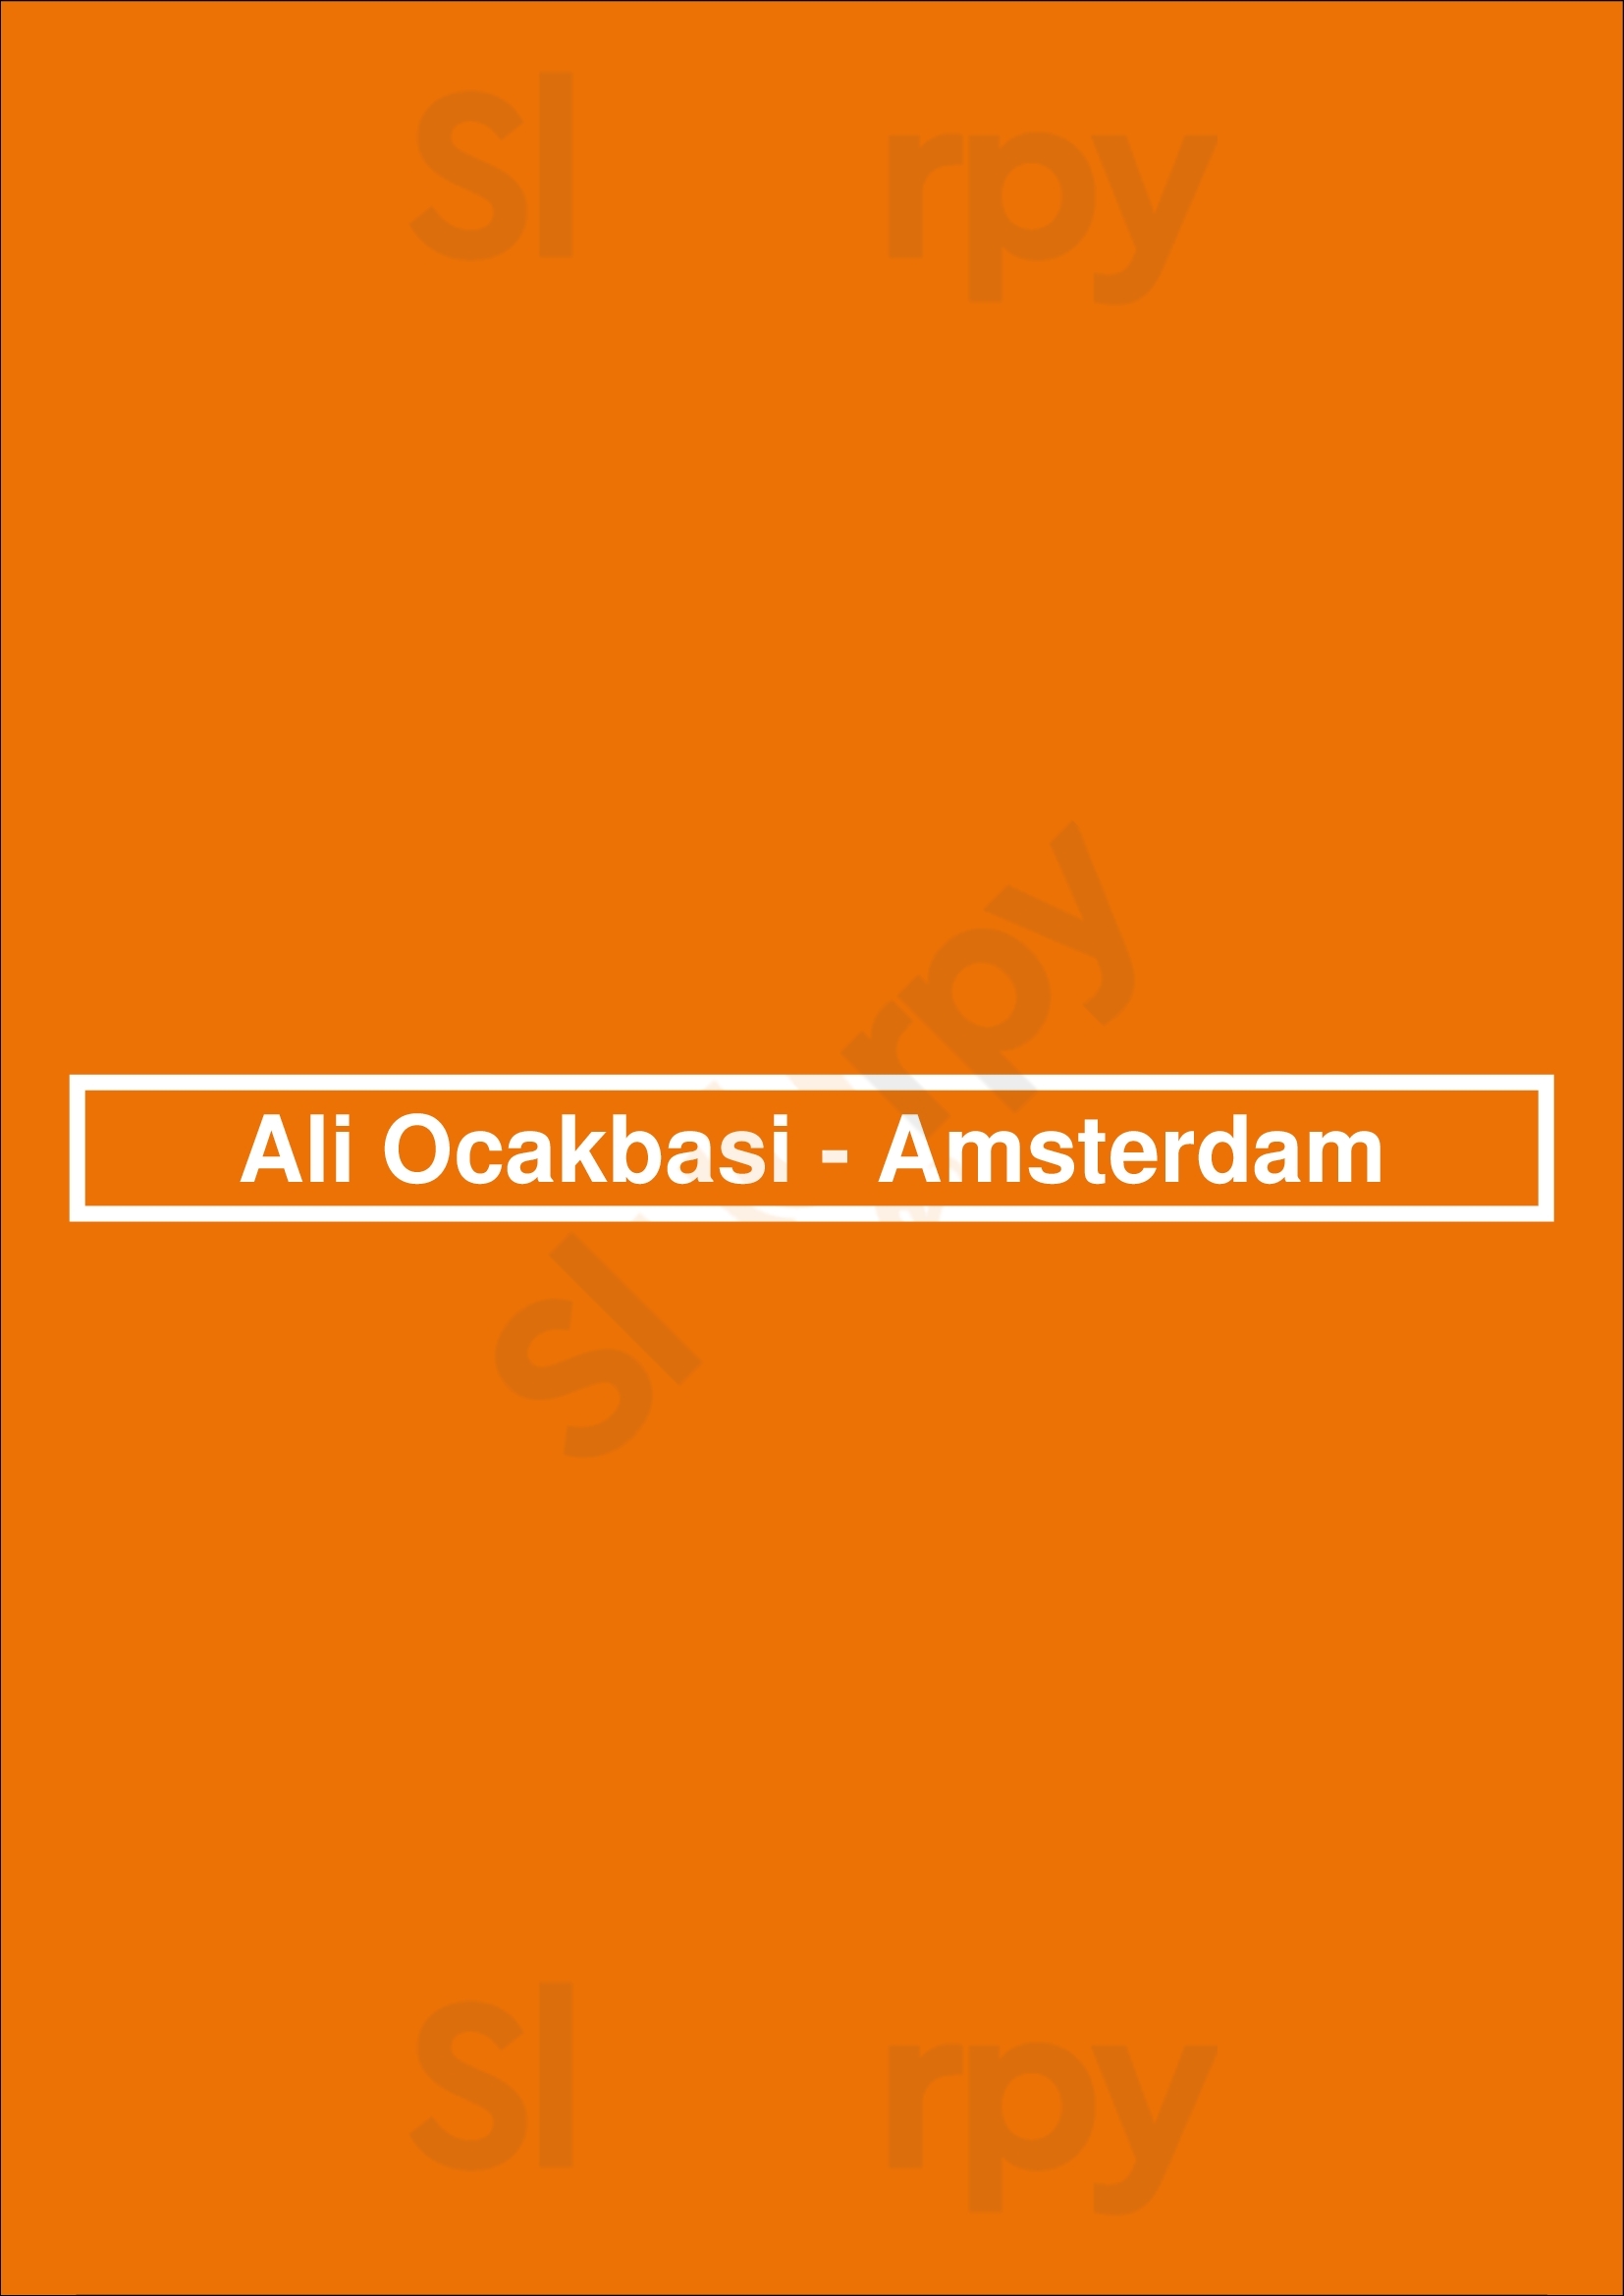 Ali Ocakbasi - Amsterdam Amsterdam Menu - 1